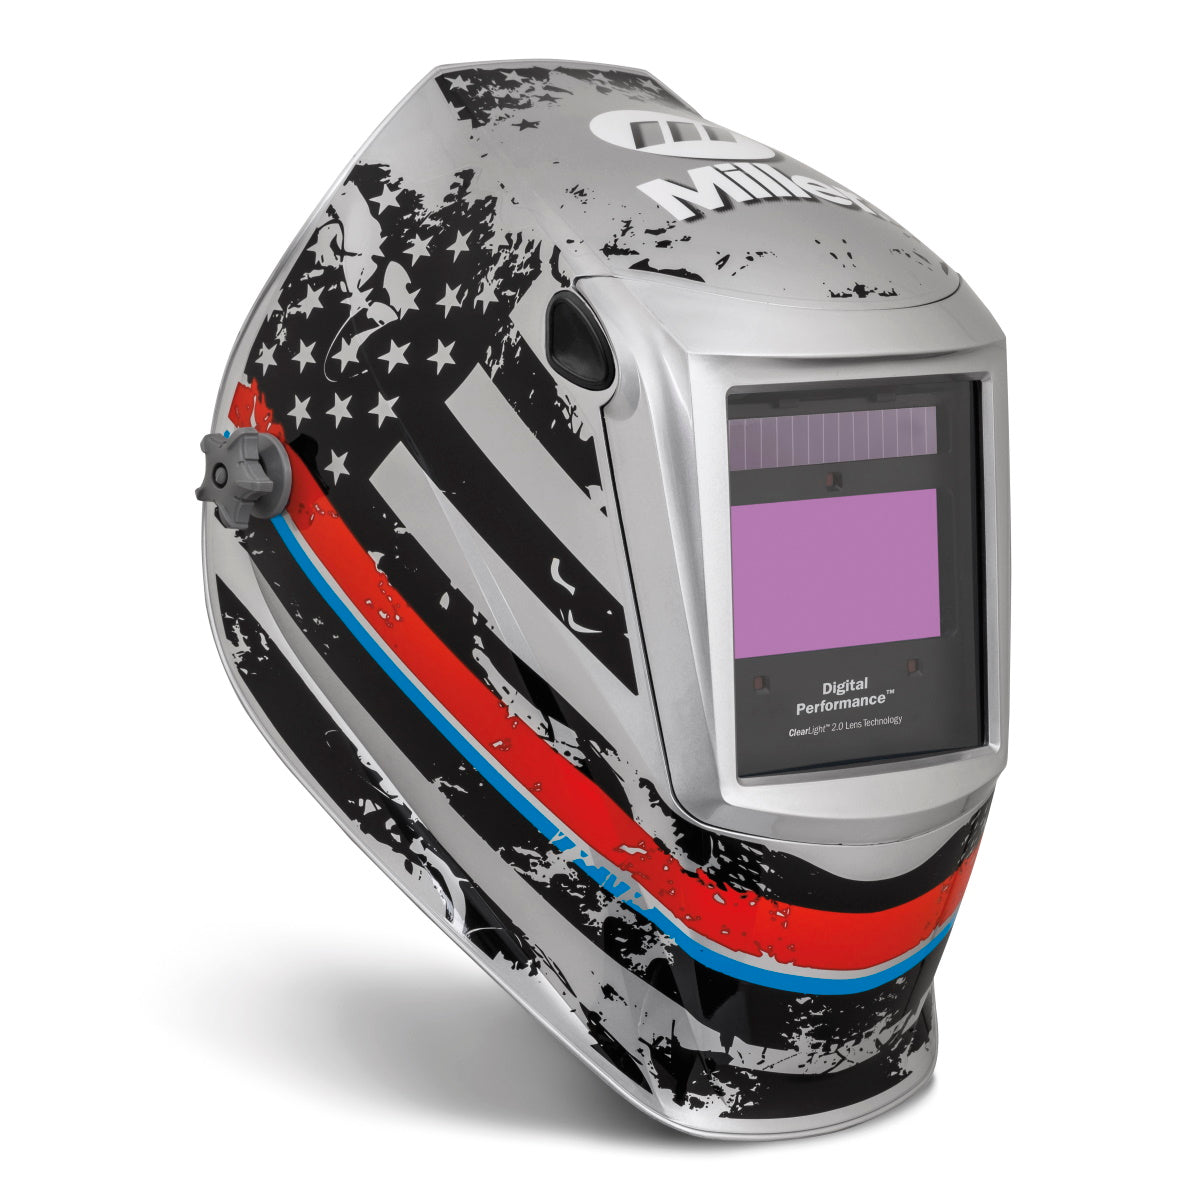 Miller Digital Performance Unity Auto Darkening Welding Helmet w/ClearLight 2.0 Lens (282006)